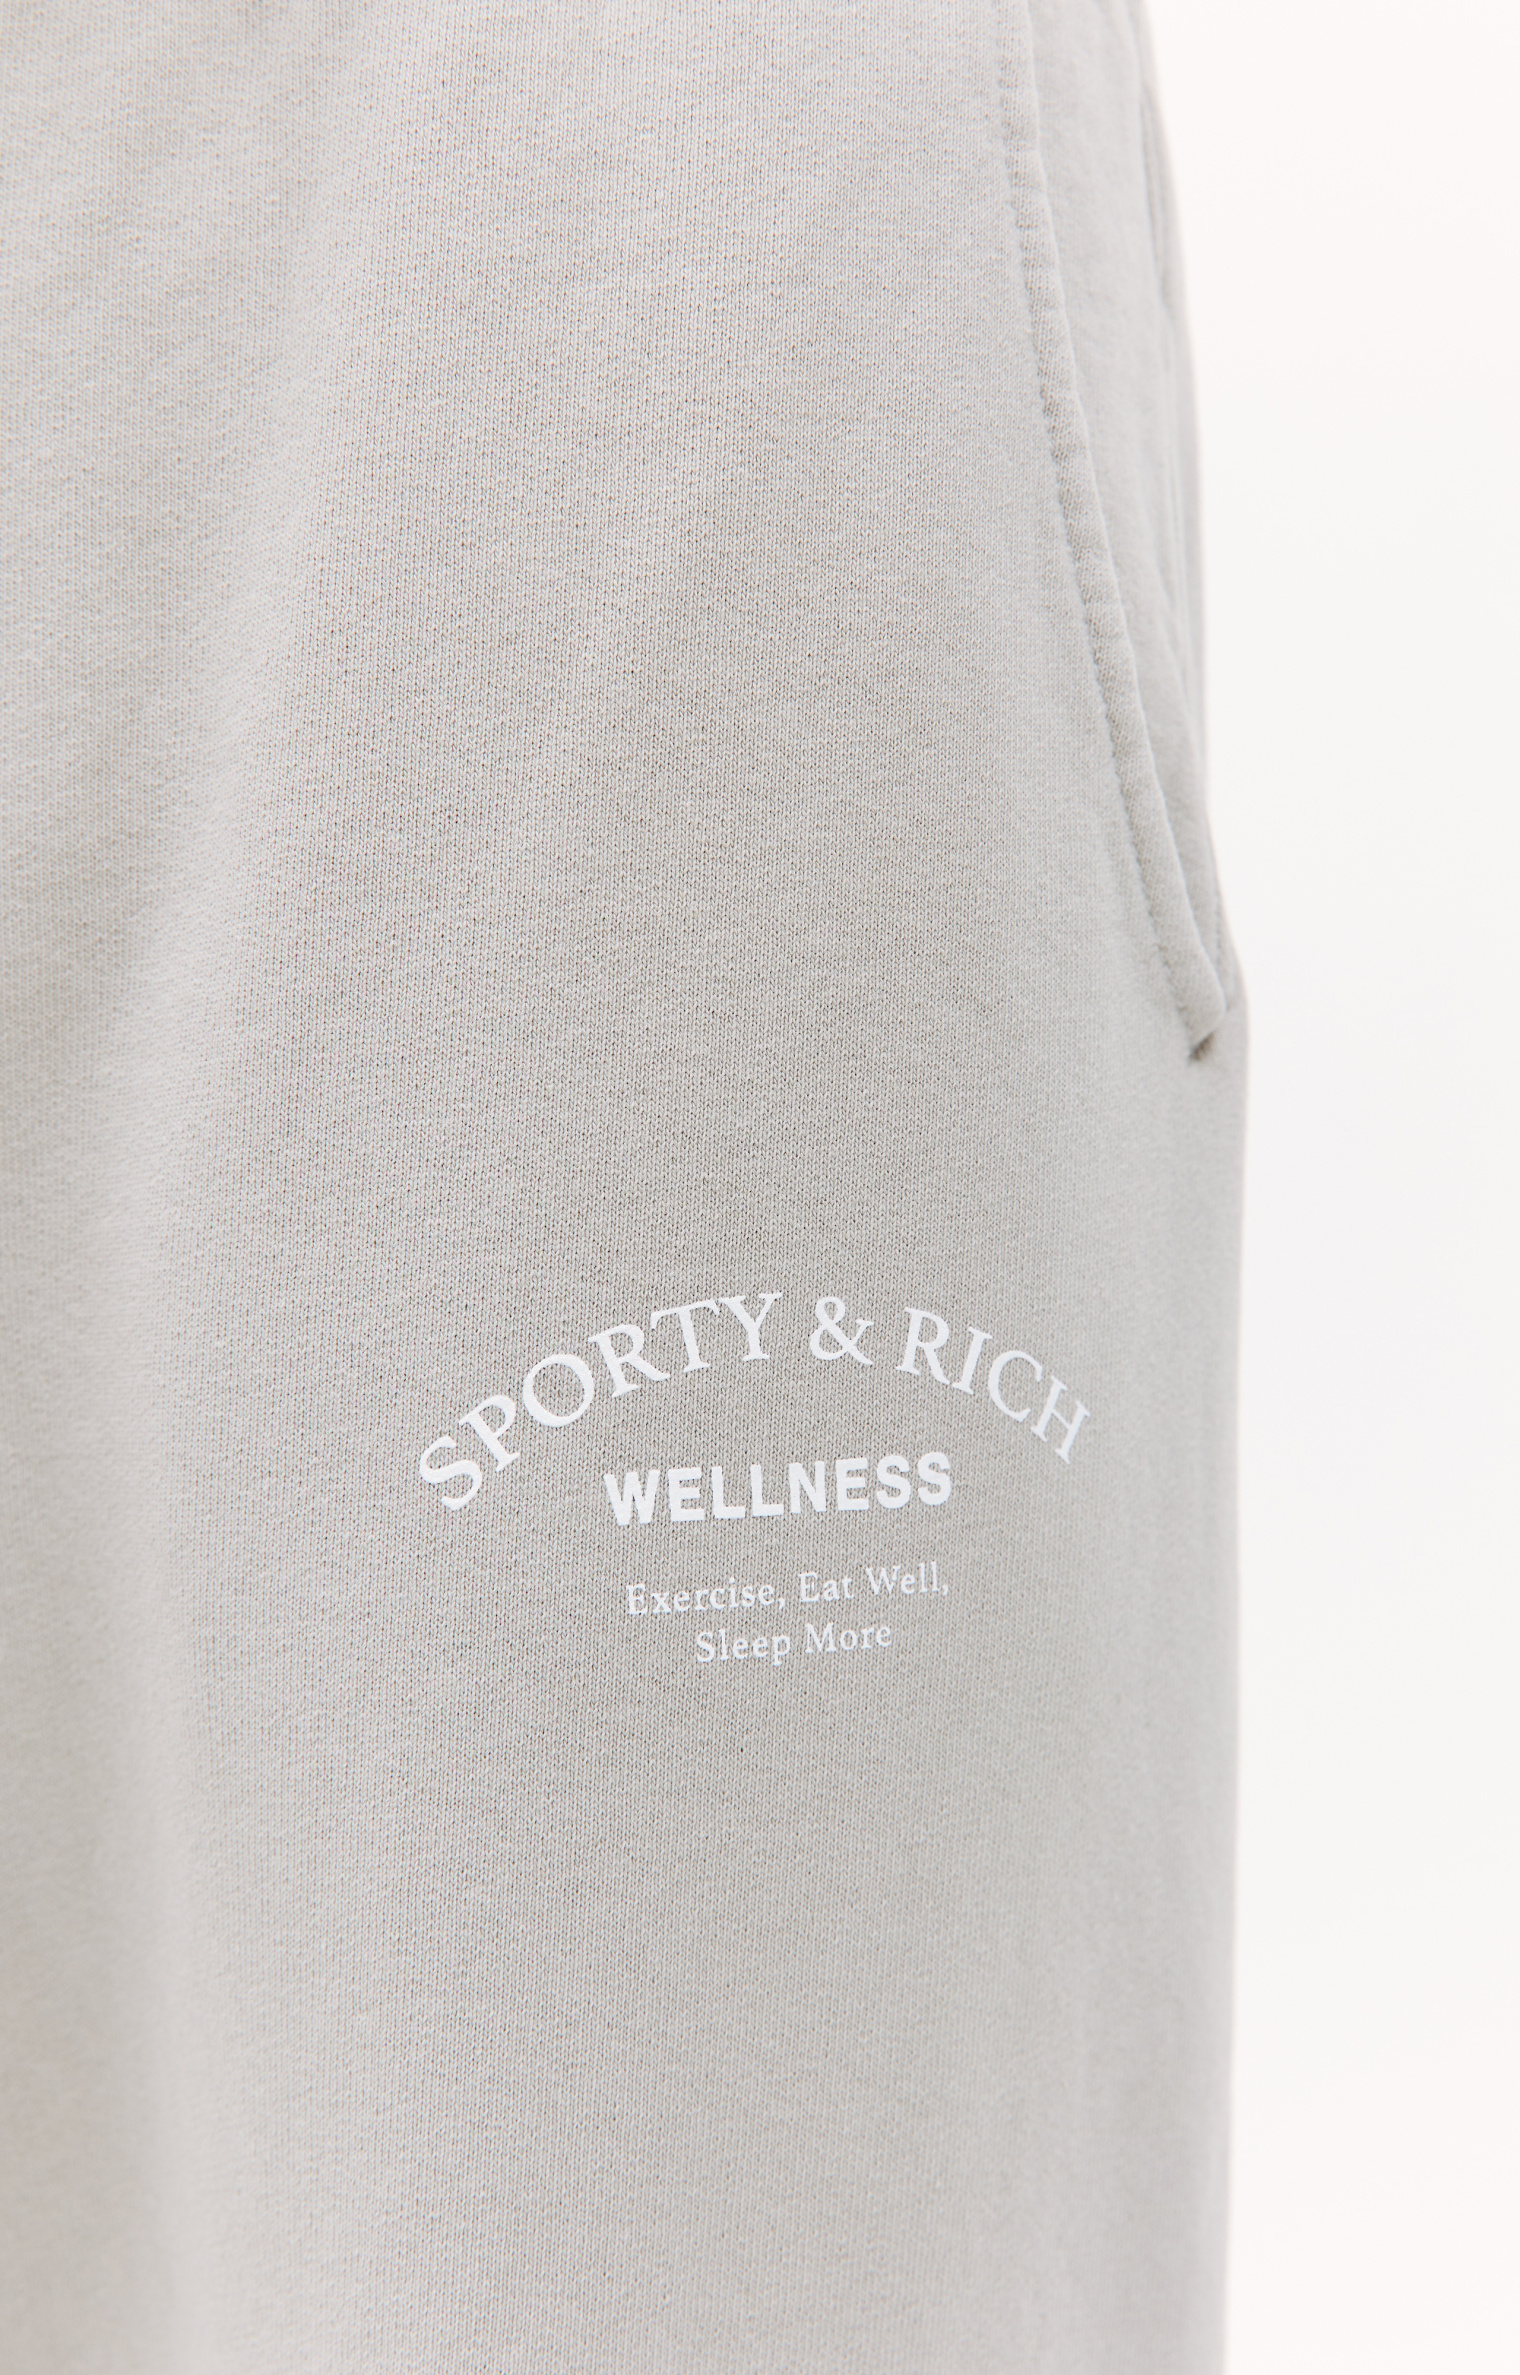 SPORTY & RICH \'Wellness\' printed sweatpants